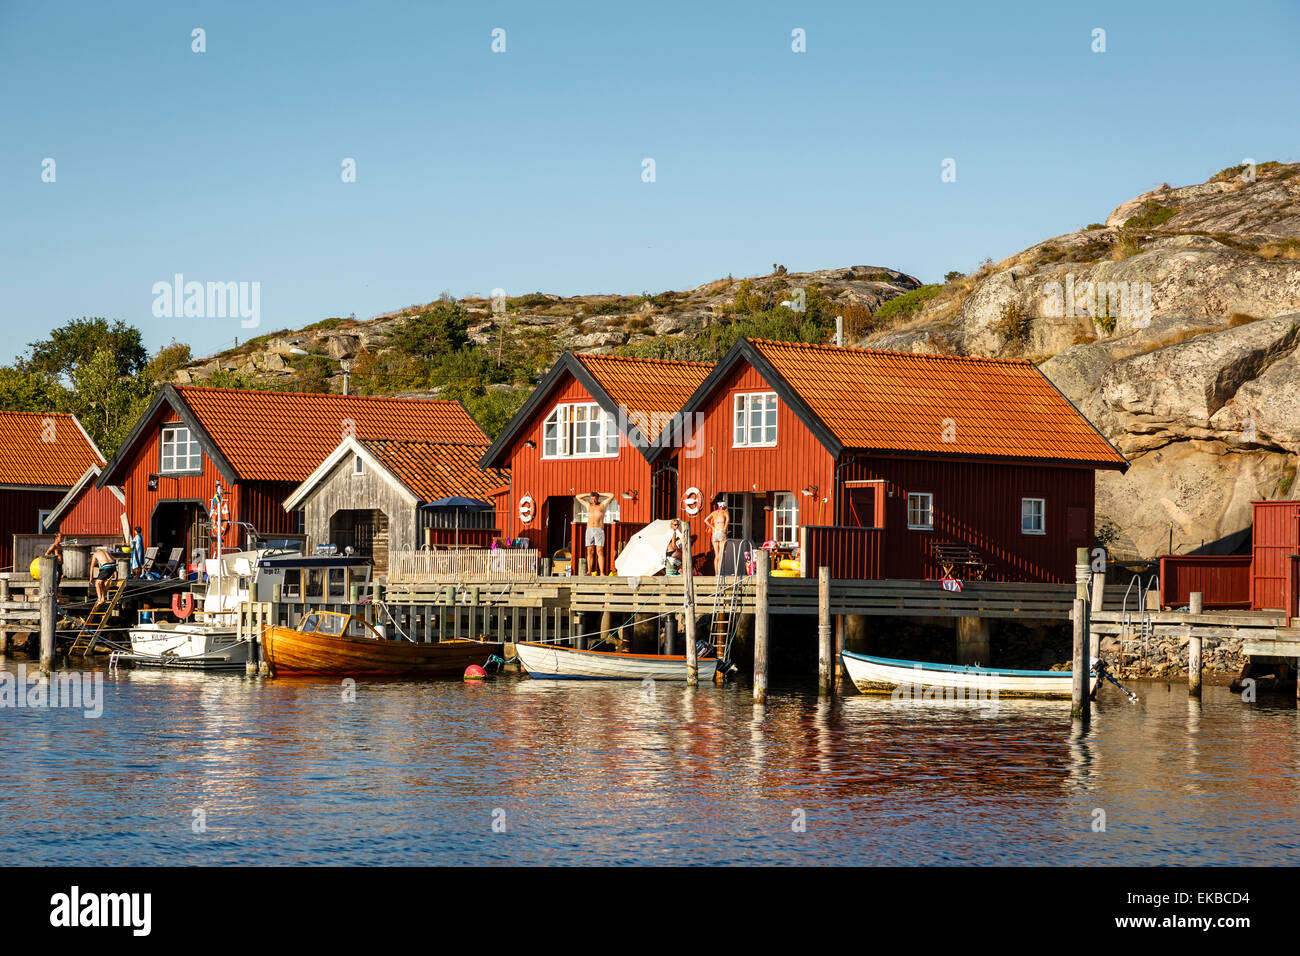 Timber houses, Grebbestad, Bohuslan region, west coast, Sweden, Scandinavia, Europe Stock Photo